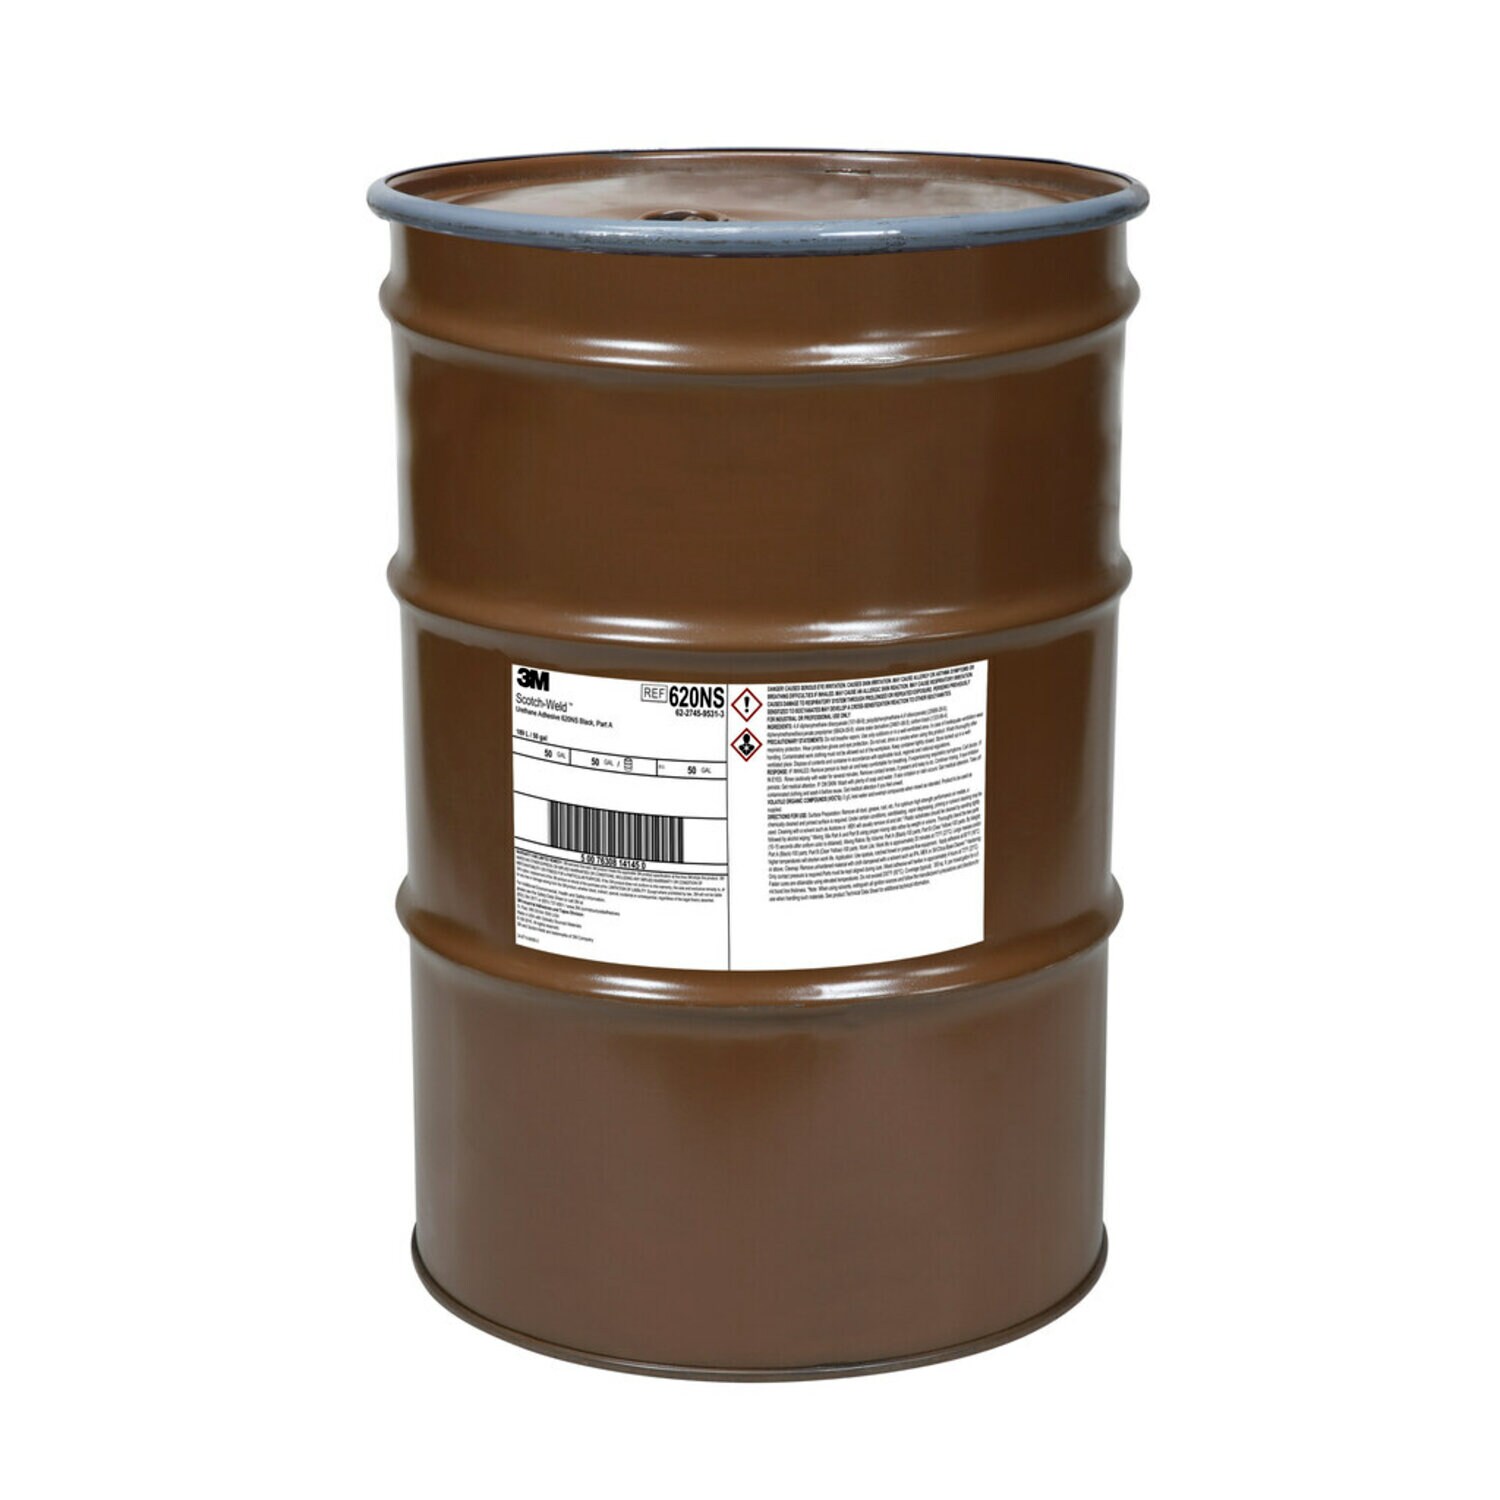 7010301034 - 3M Scotch-Weld Urethane Adhesive 620NS, Black, Part A, 55 Gallon (50
Gallon Net), Drum